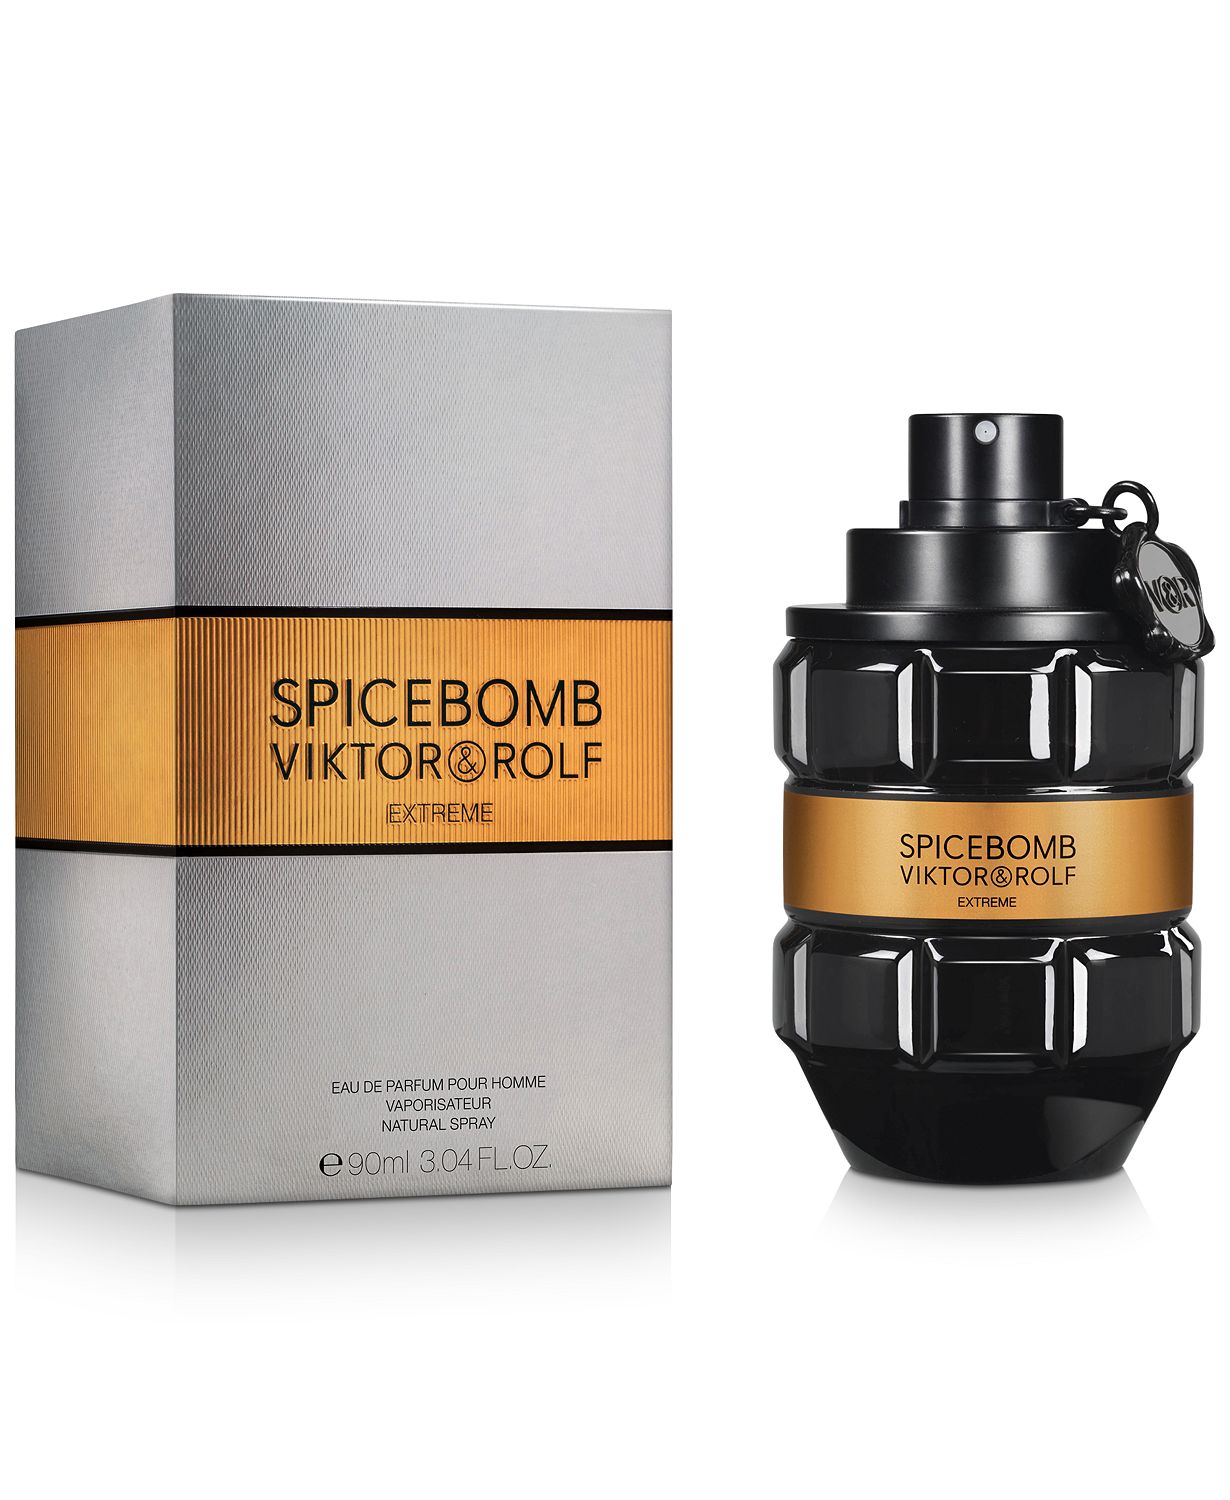 Spicebomb Extreme Eau de Parfum Spray, 3.04-oz.